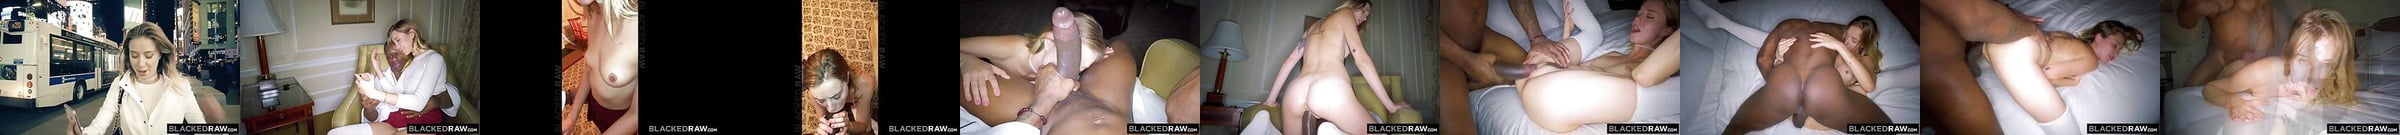 Blacked Raw Intense Hardcore Compilation Porn B3 Xhamster Jp 